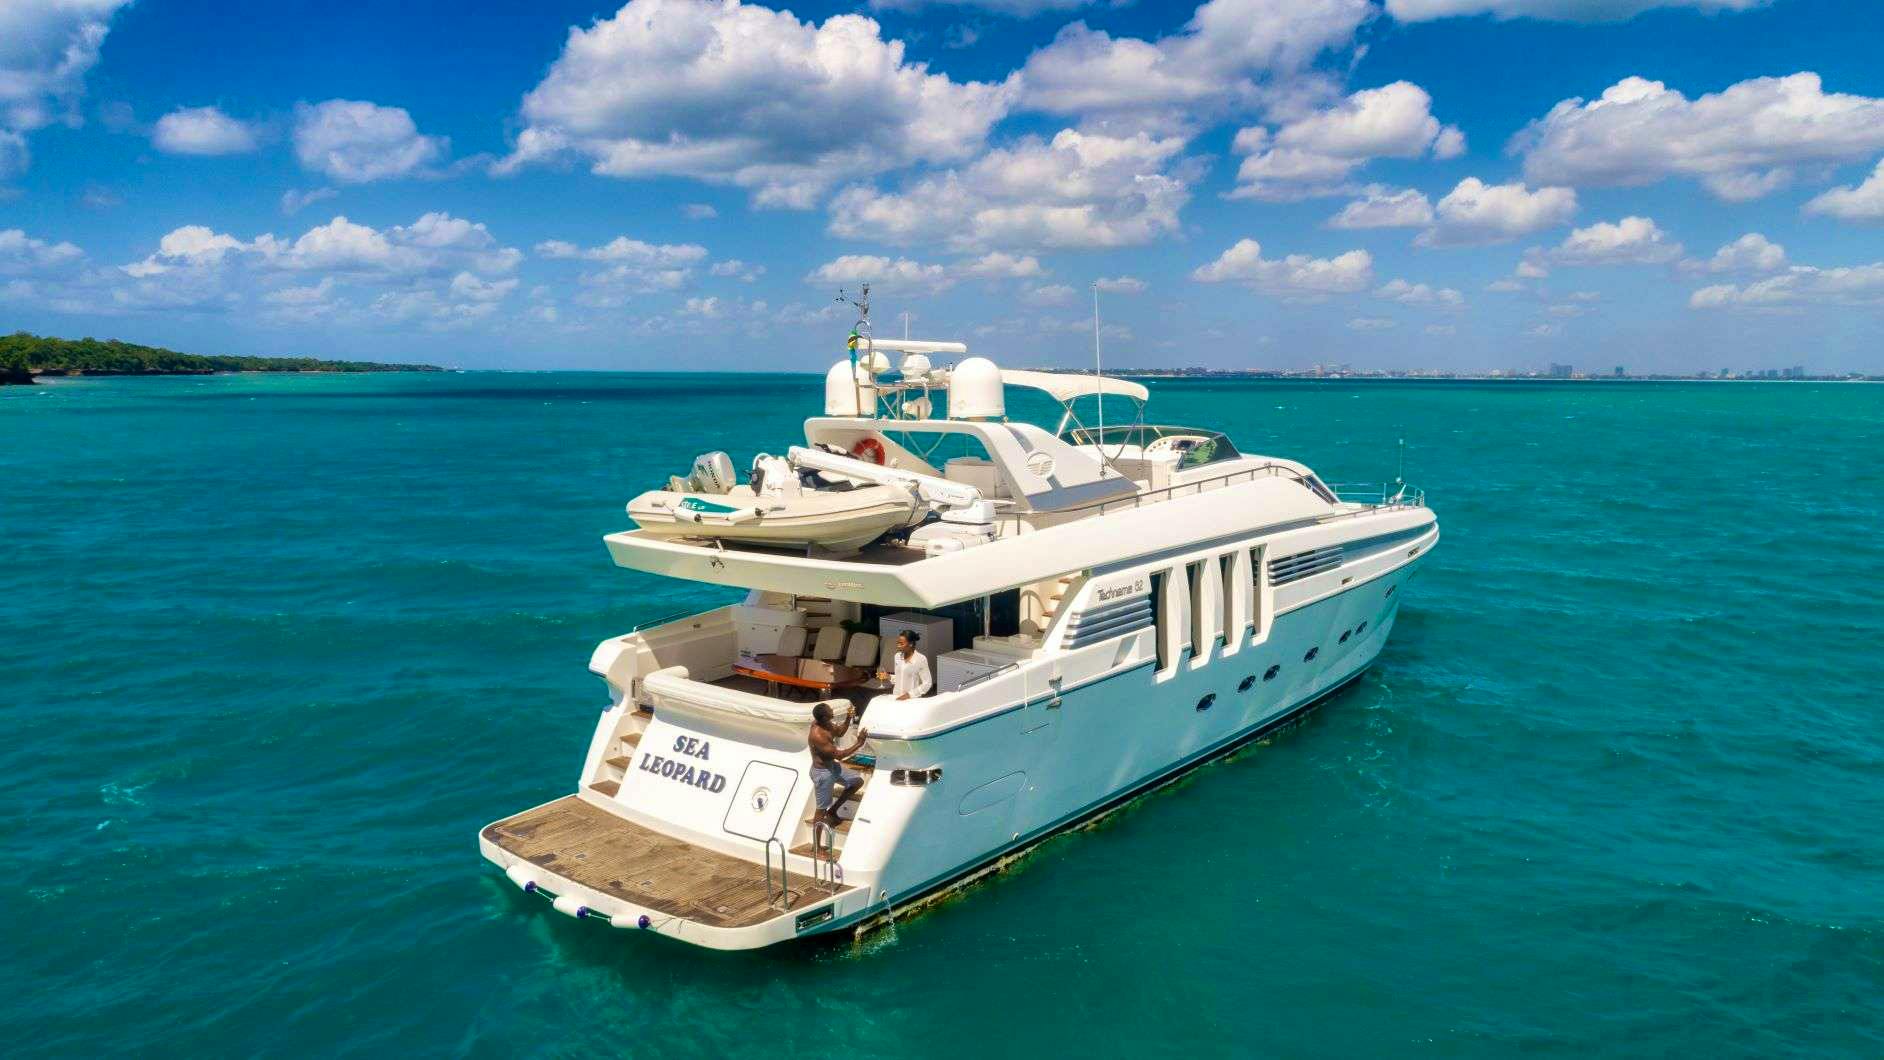 Sea Leopard  Yacht